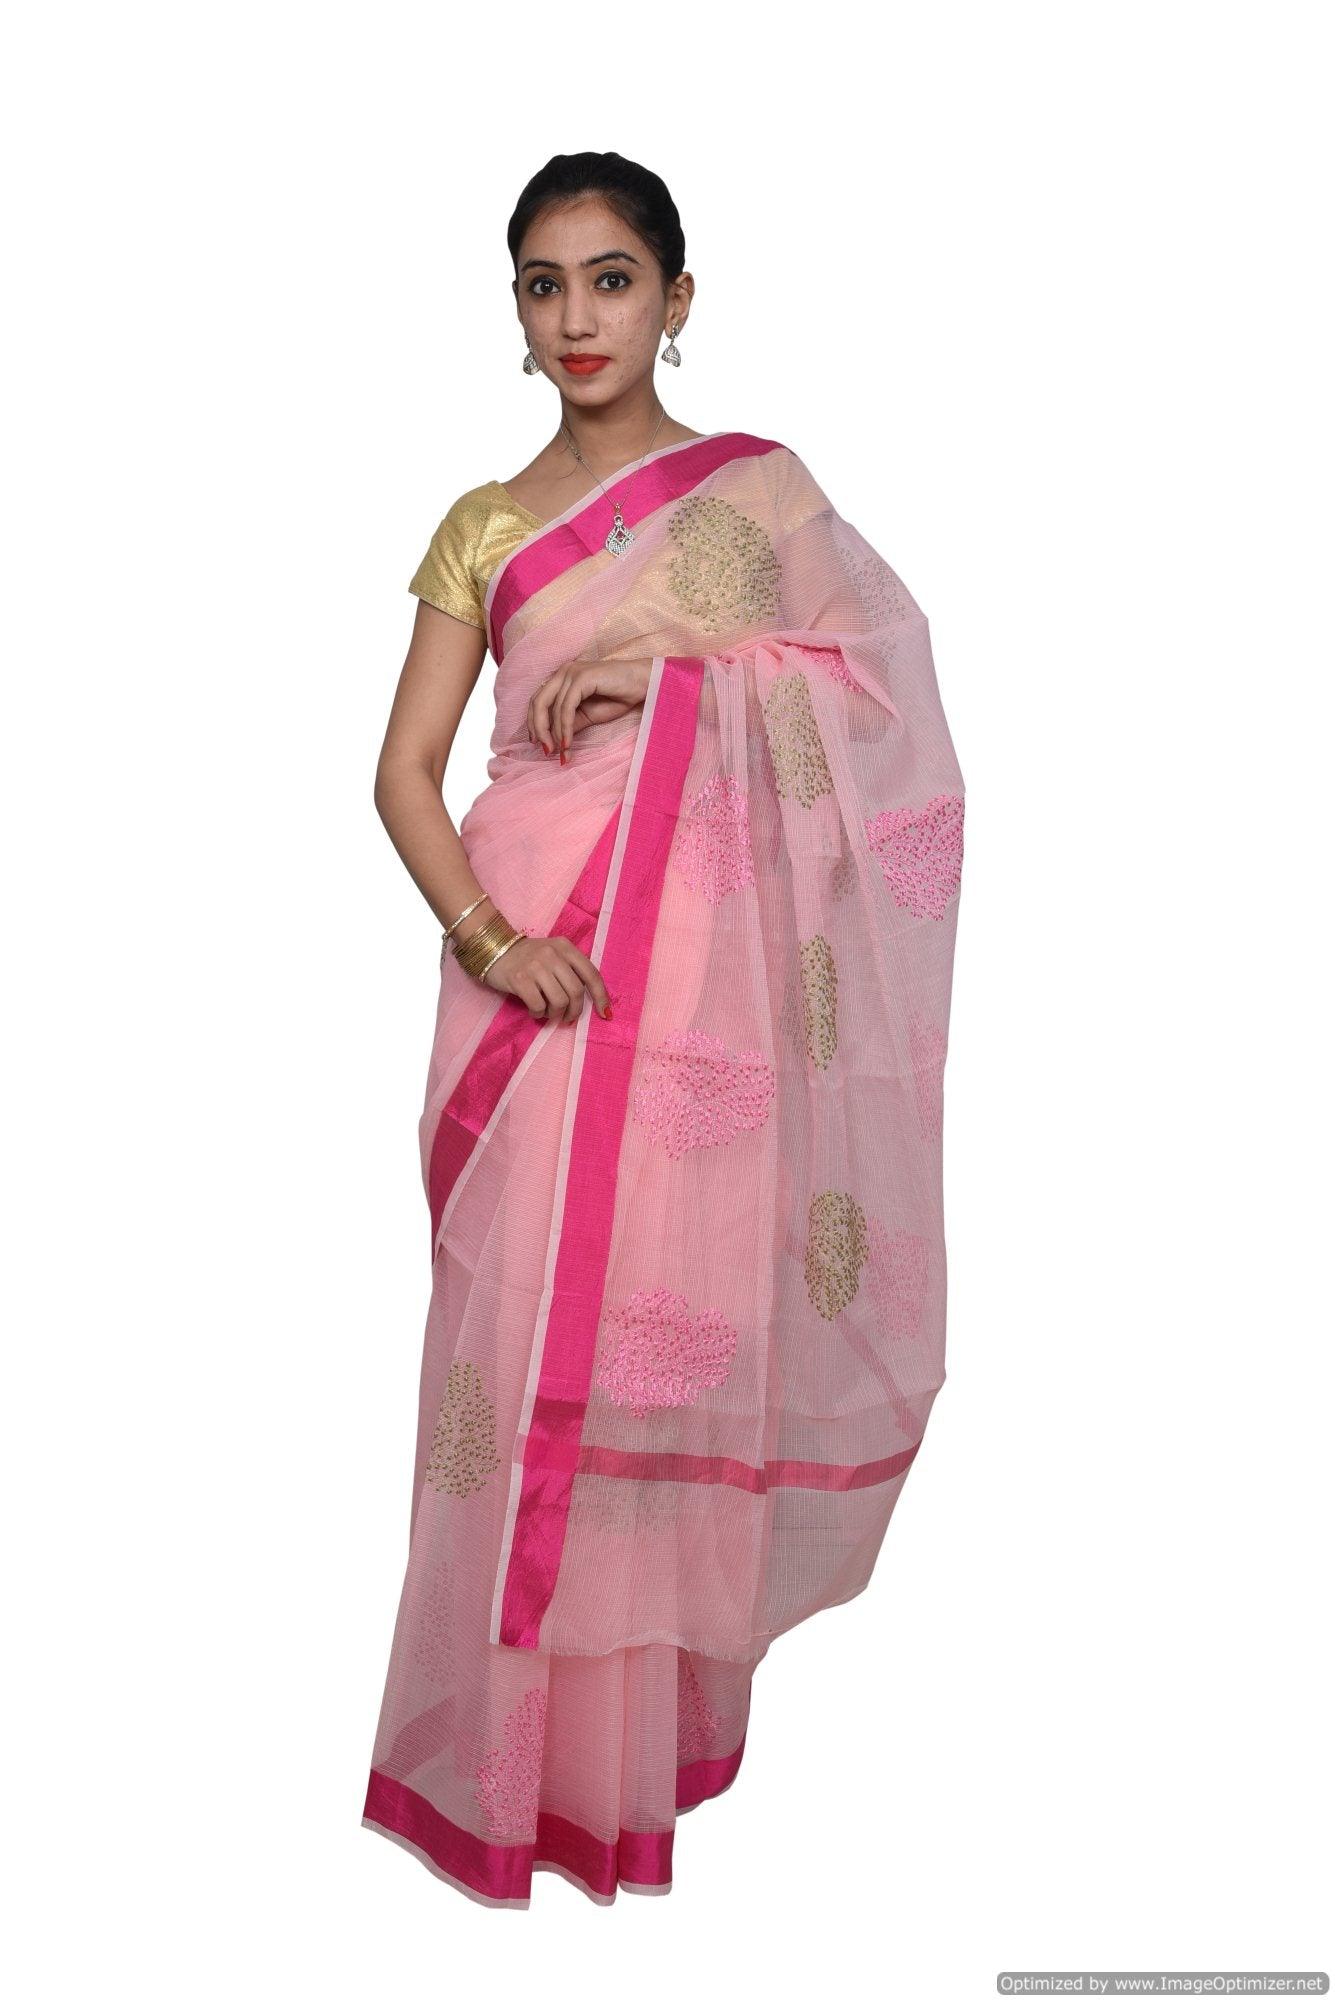 Designer Pink Kota Cotton Embroidered Floral Motif Saree KCS79-Ethnic's By Anvi Creations-Handloom Saree